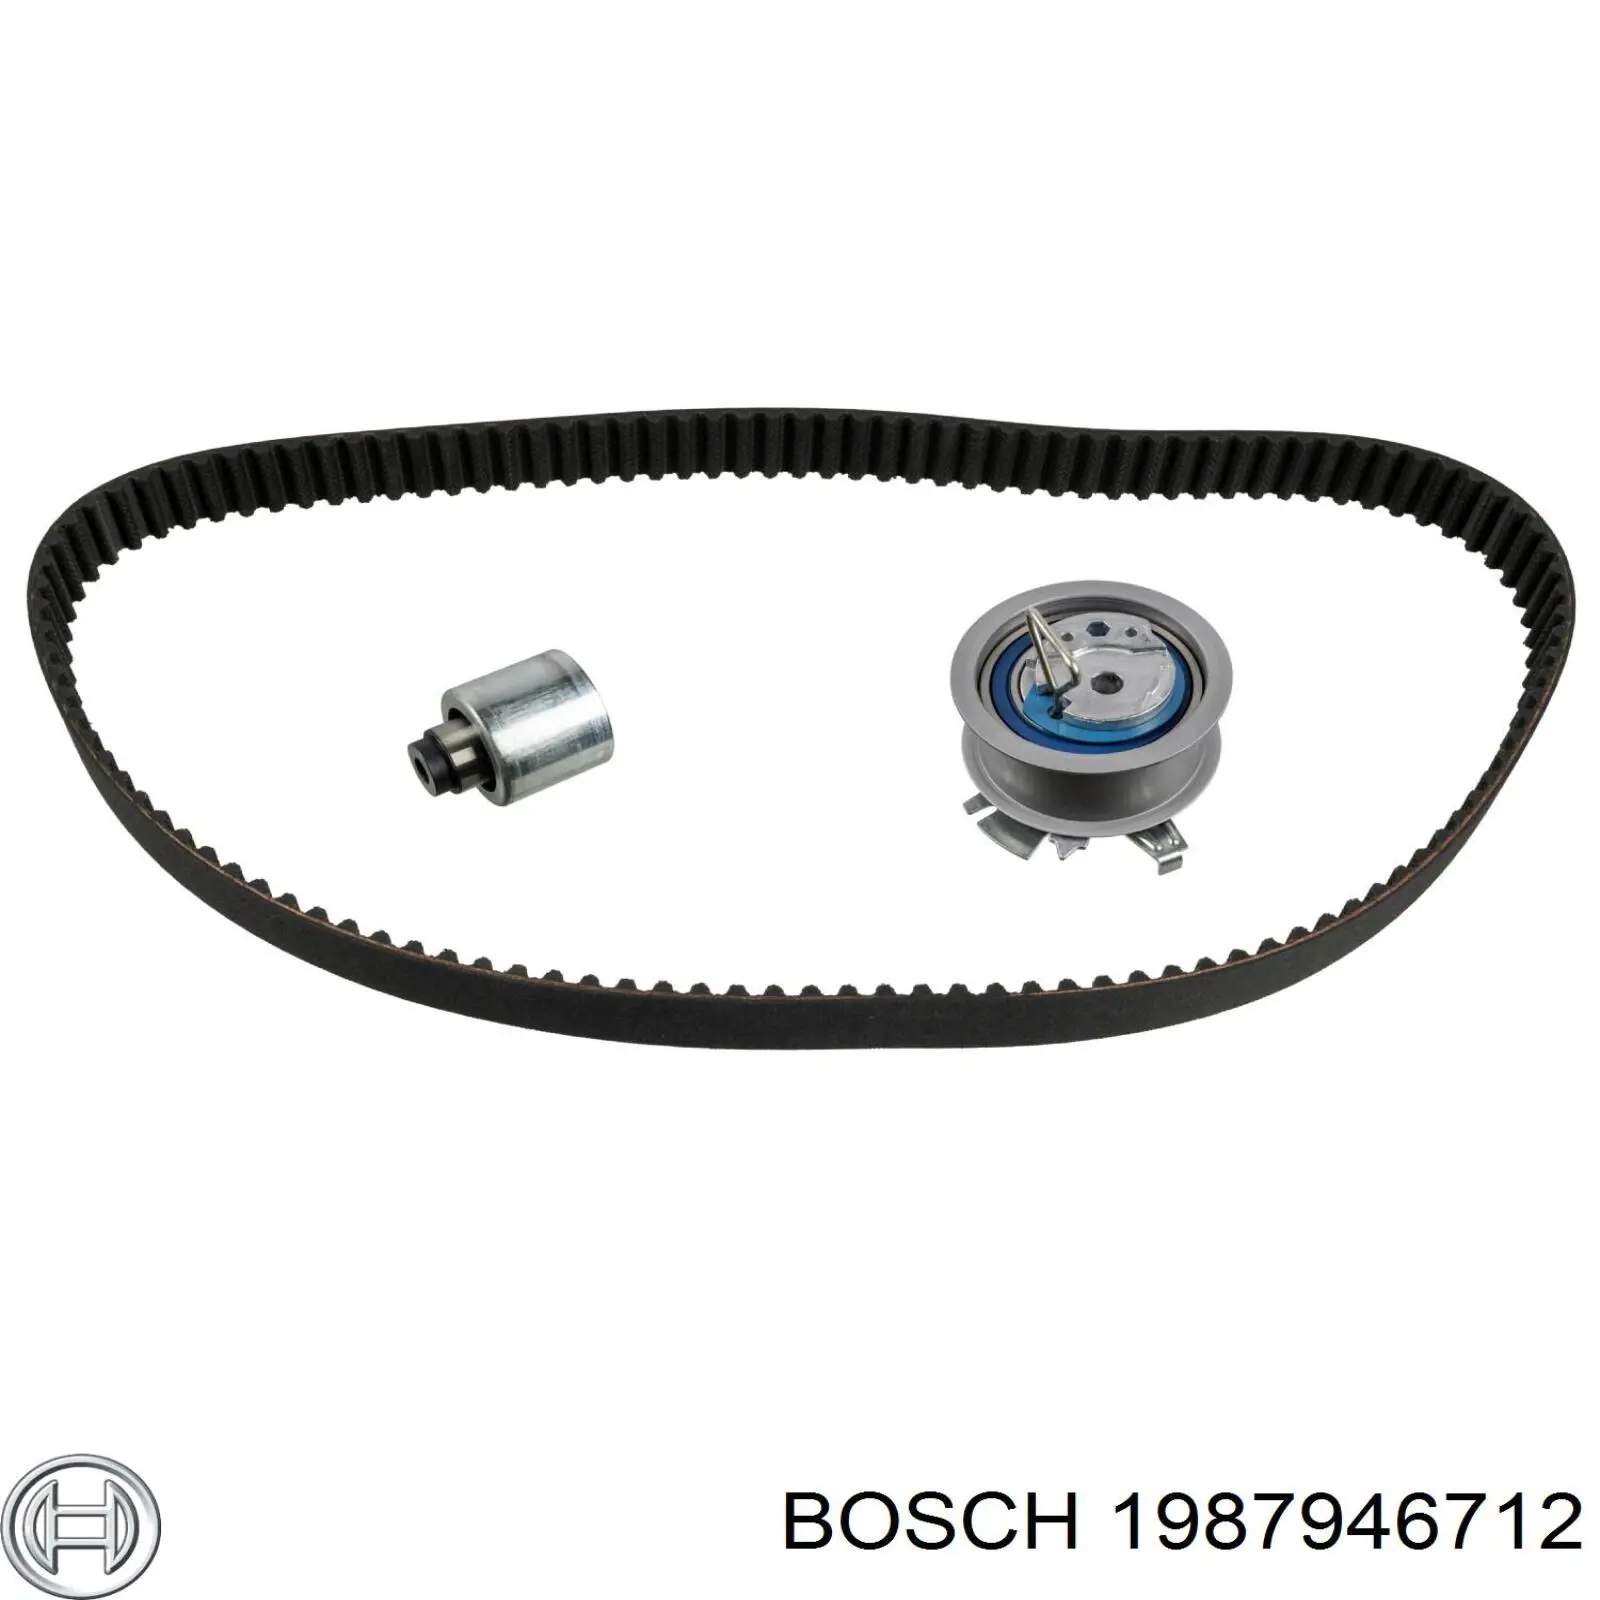 1987946712 Bosch комплект грм